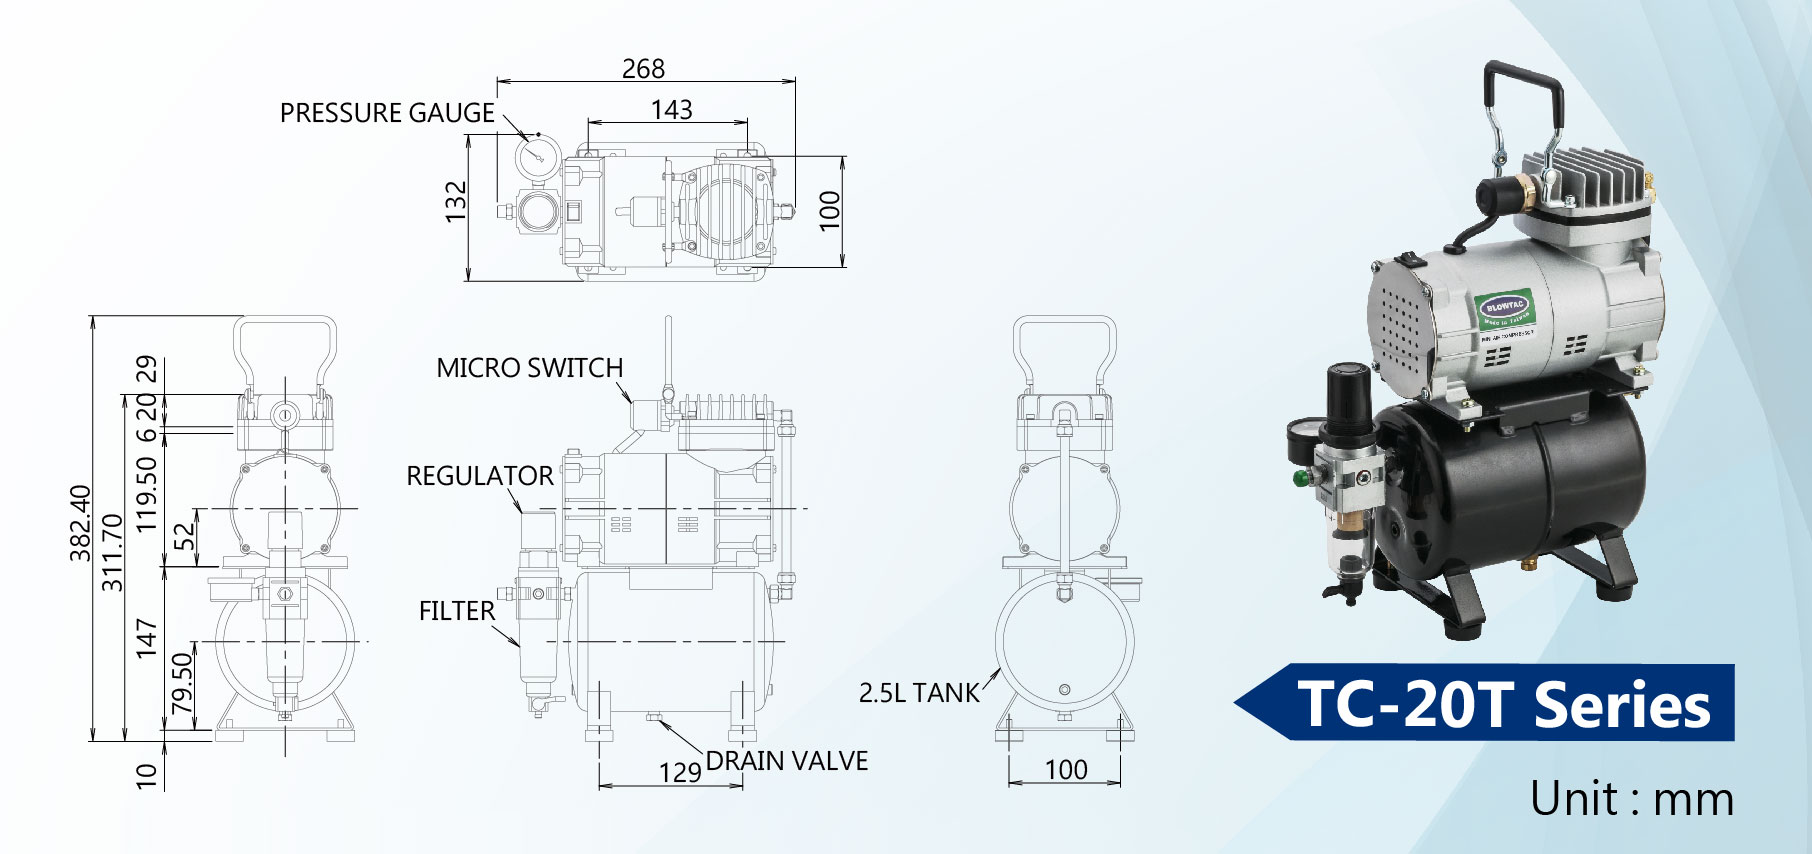 Dimensiones de los mini compresores de aire de la serie TC-20T